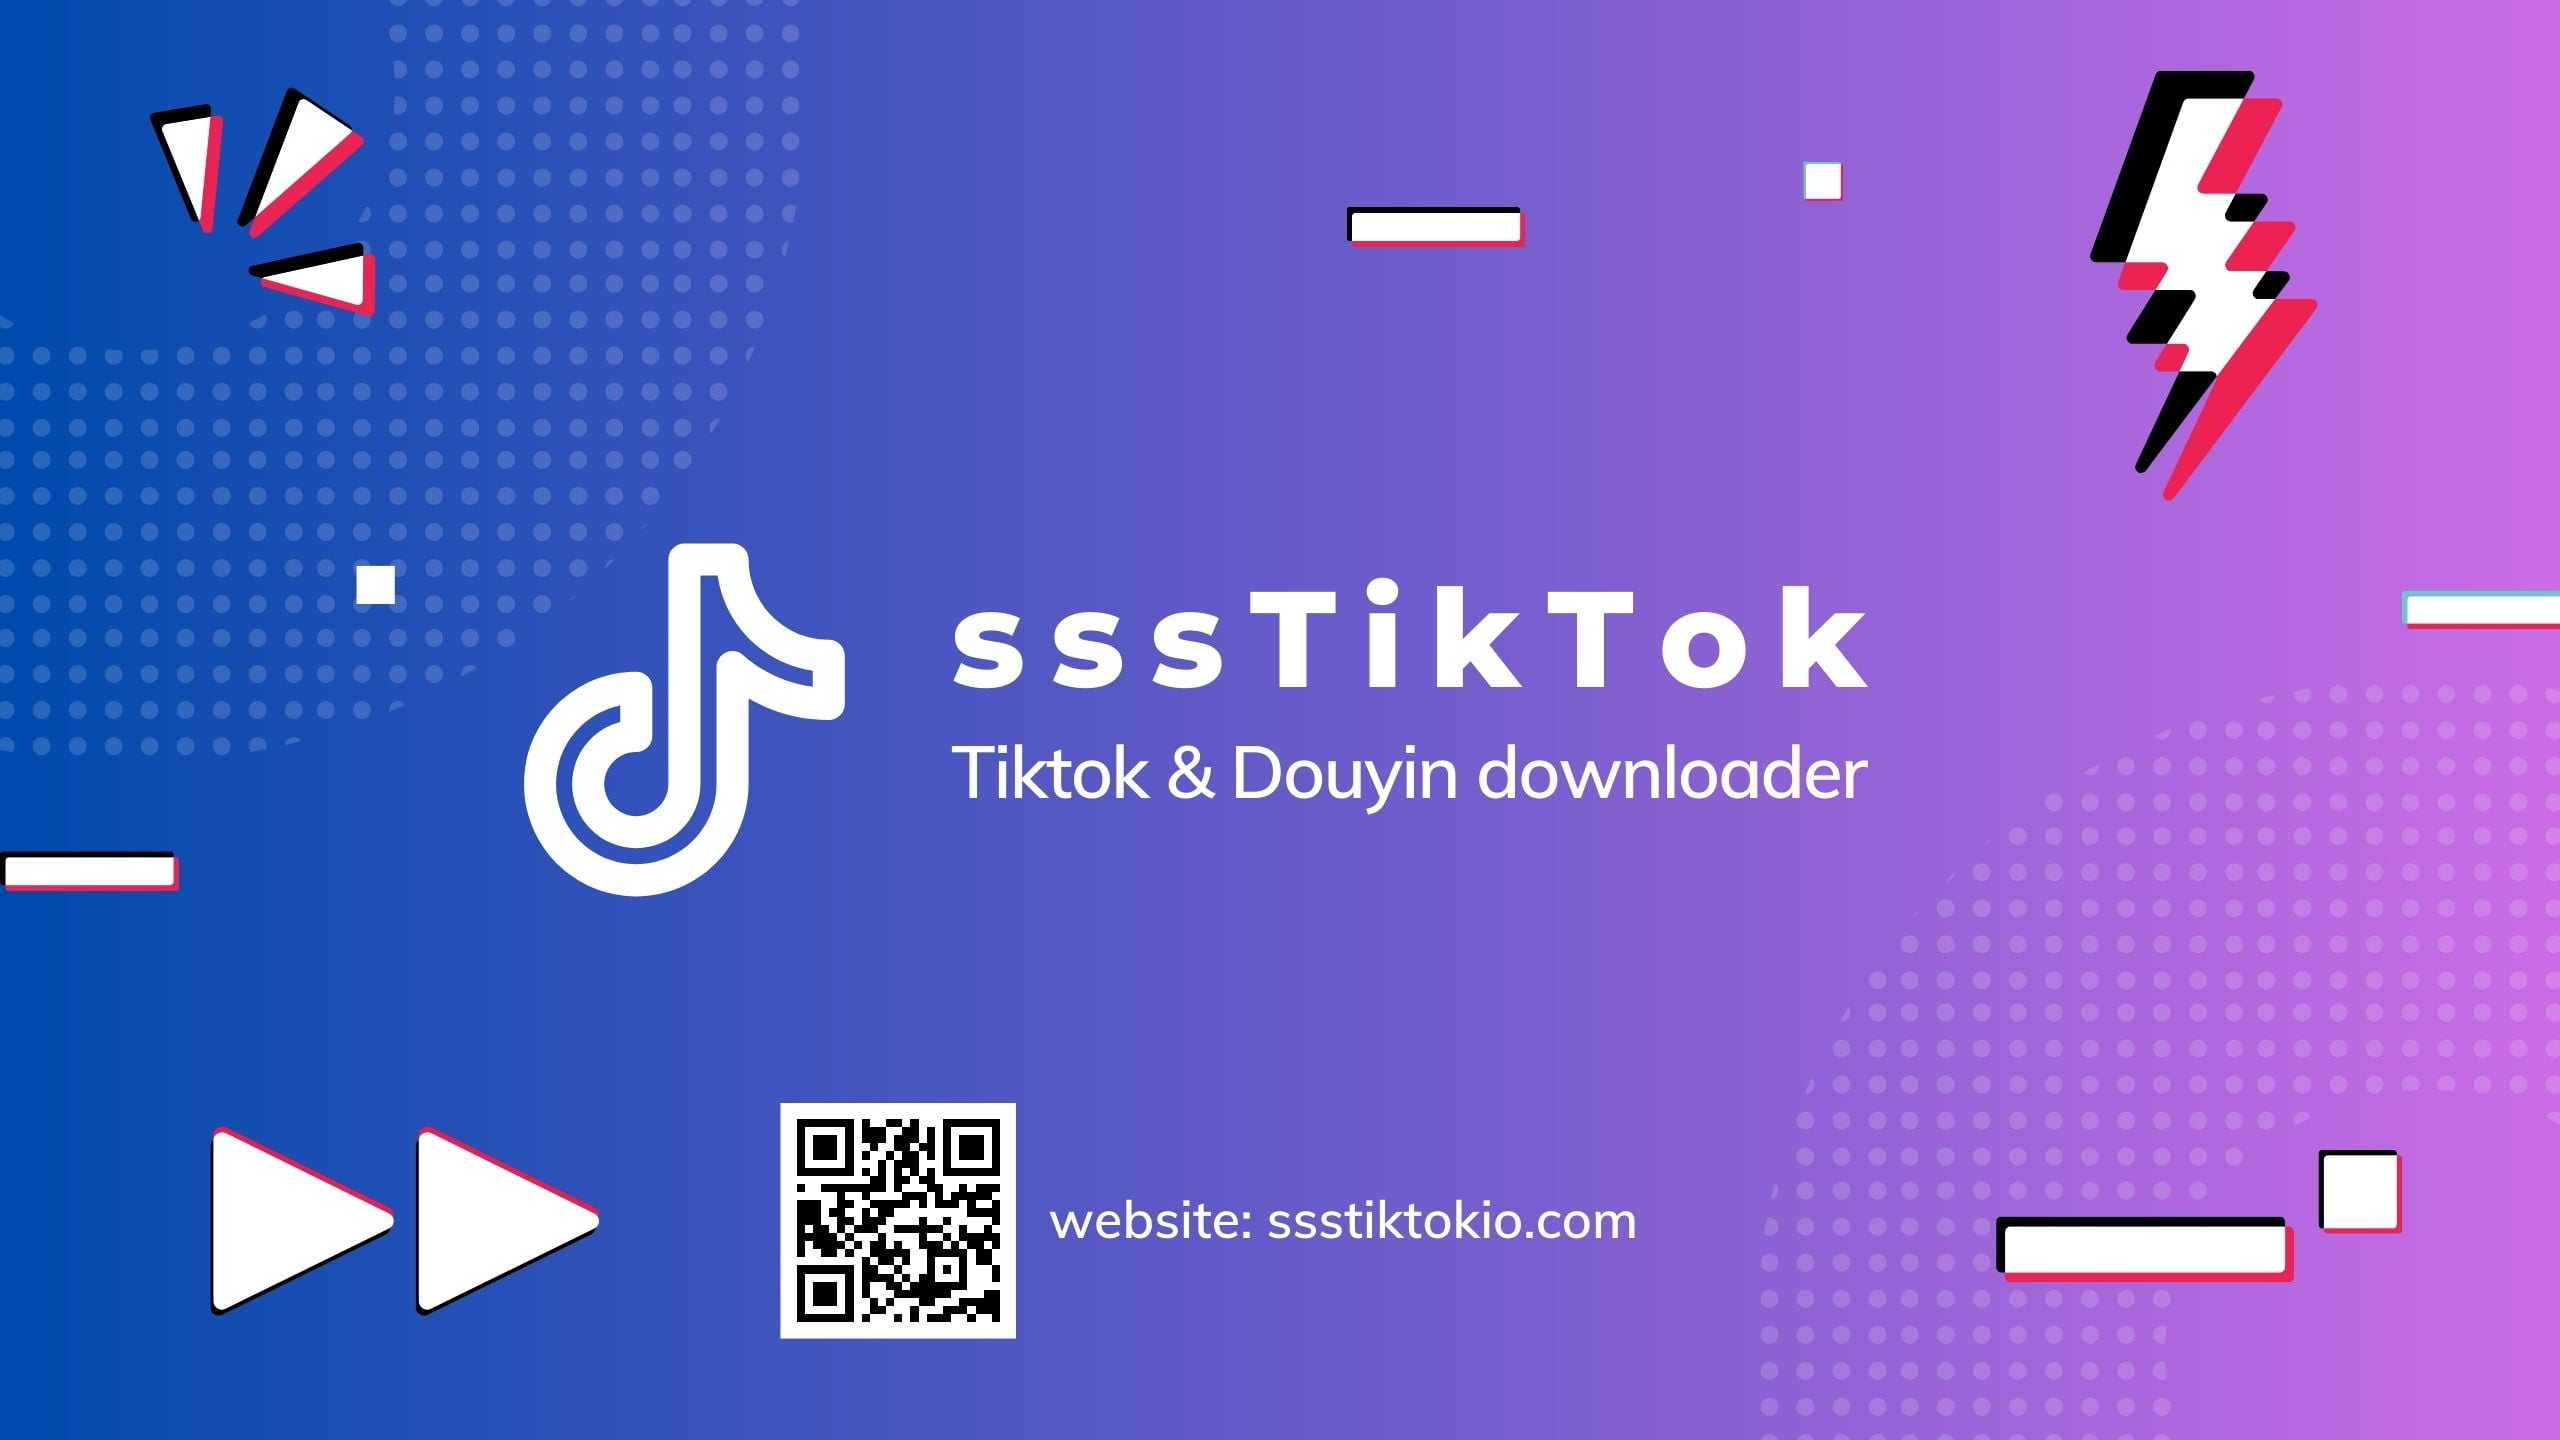 sssTiktok - Tiktok downloader - Tiktok ロゴなし 保存